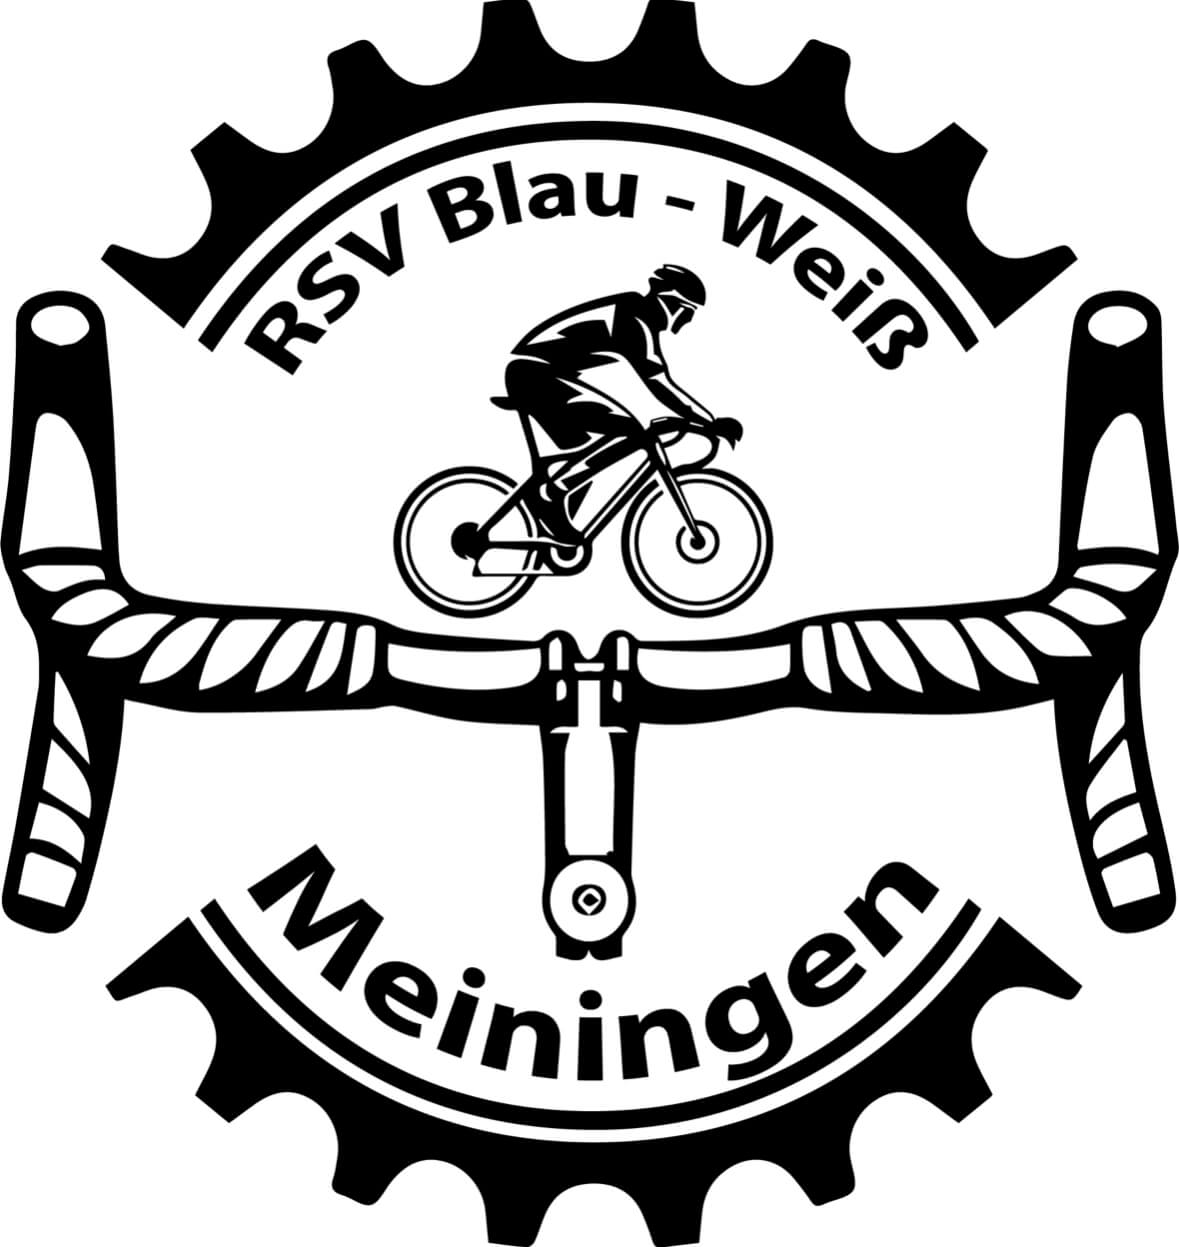 RSV Blau-Weiss Meiningen e.V.